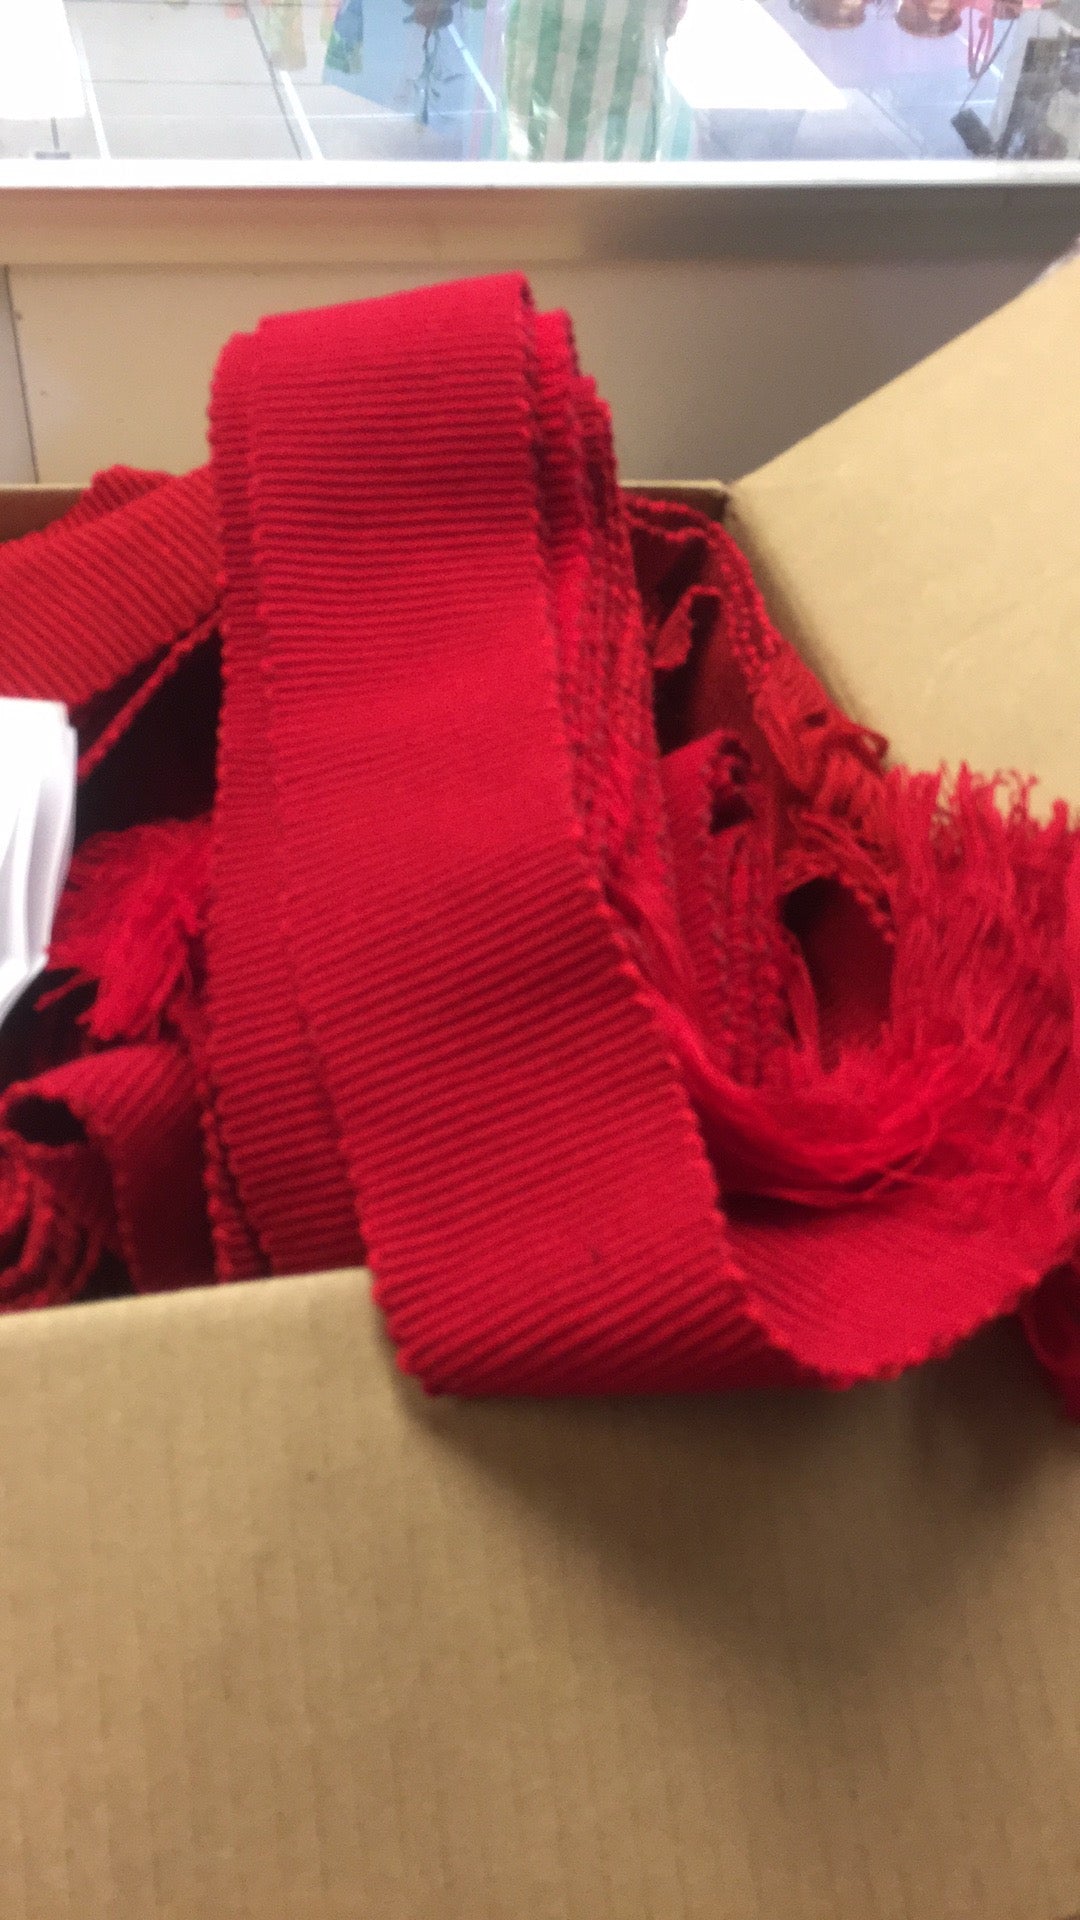 Faja roja algodón/ 100% cotton red belt (Large)